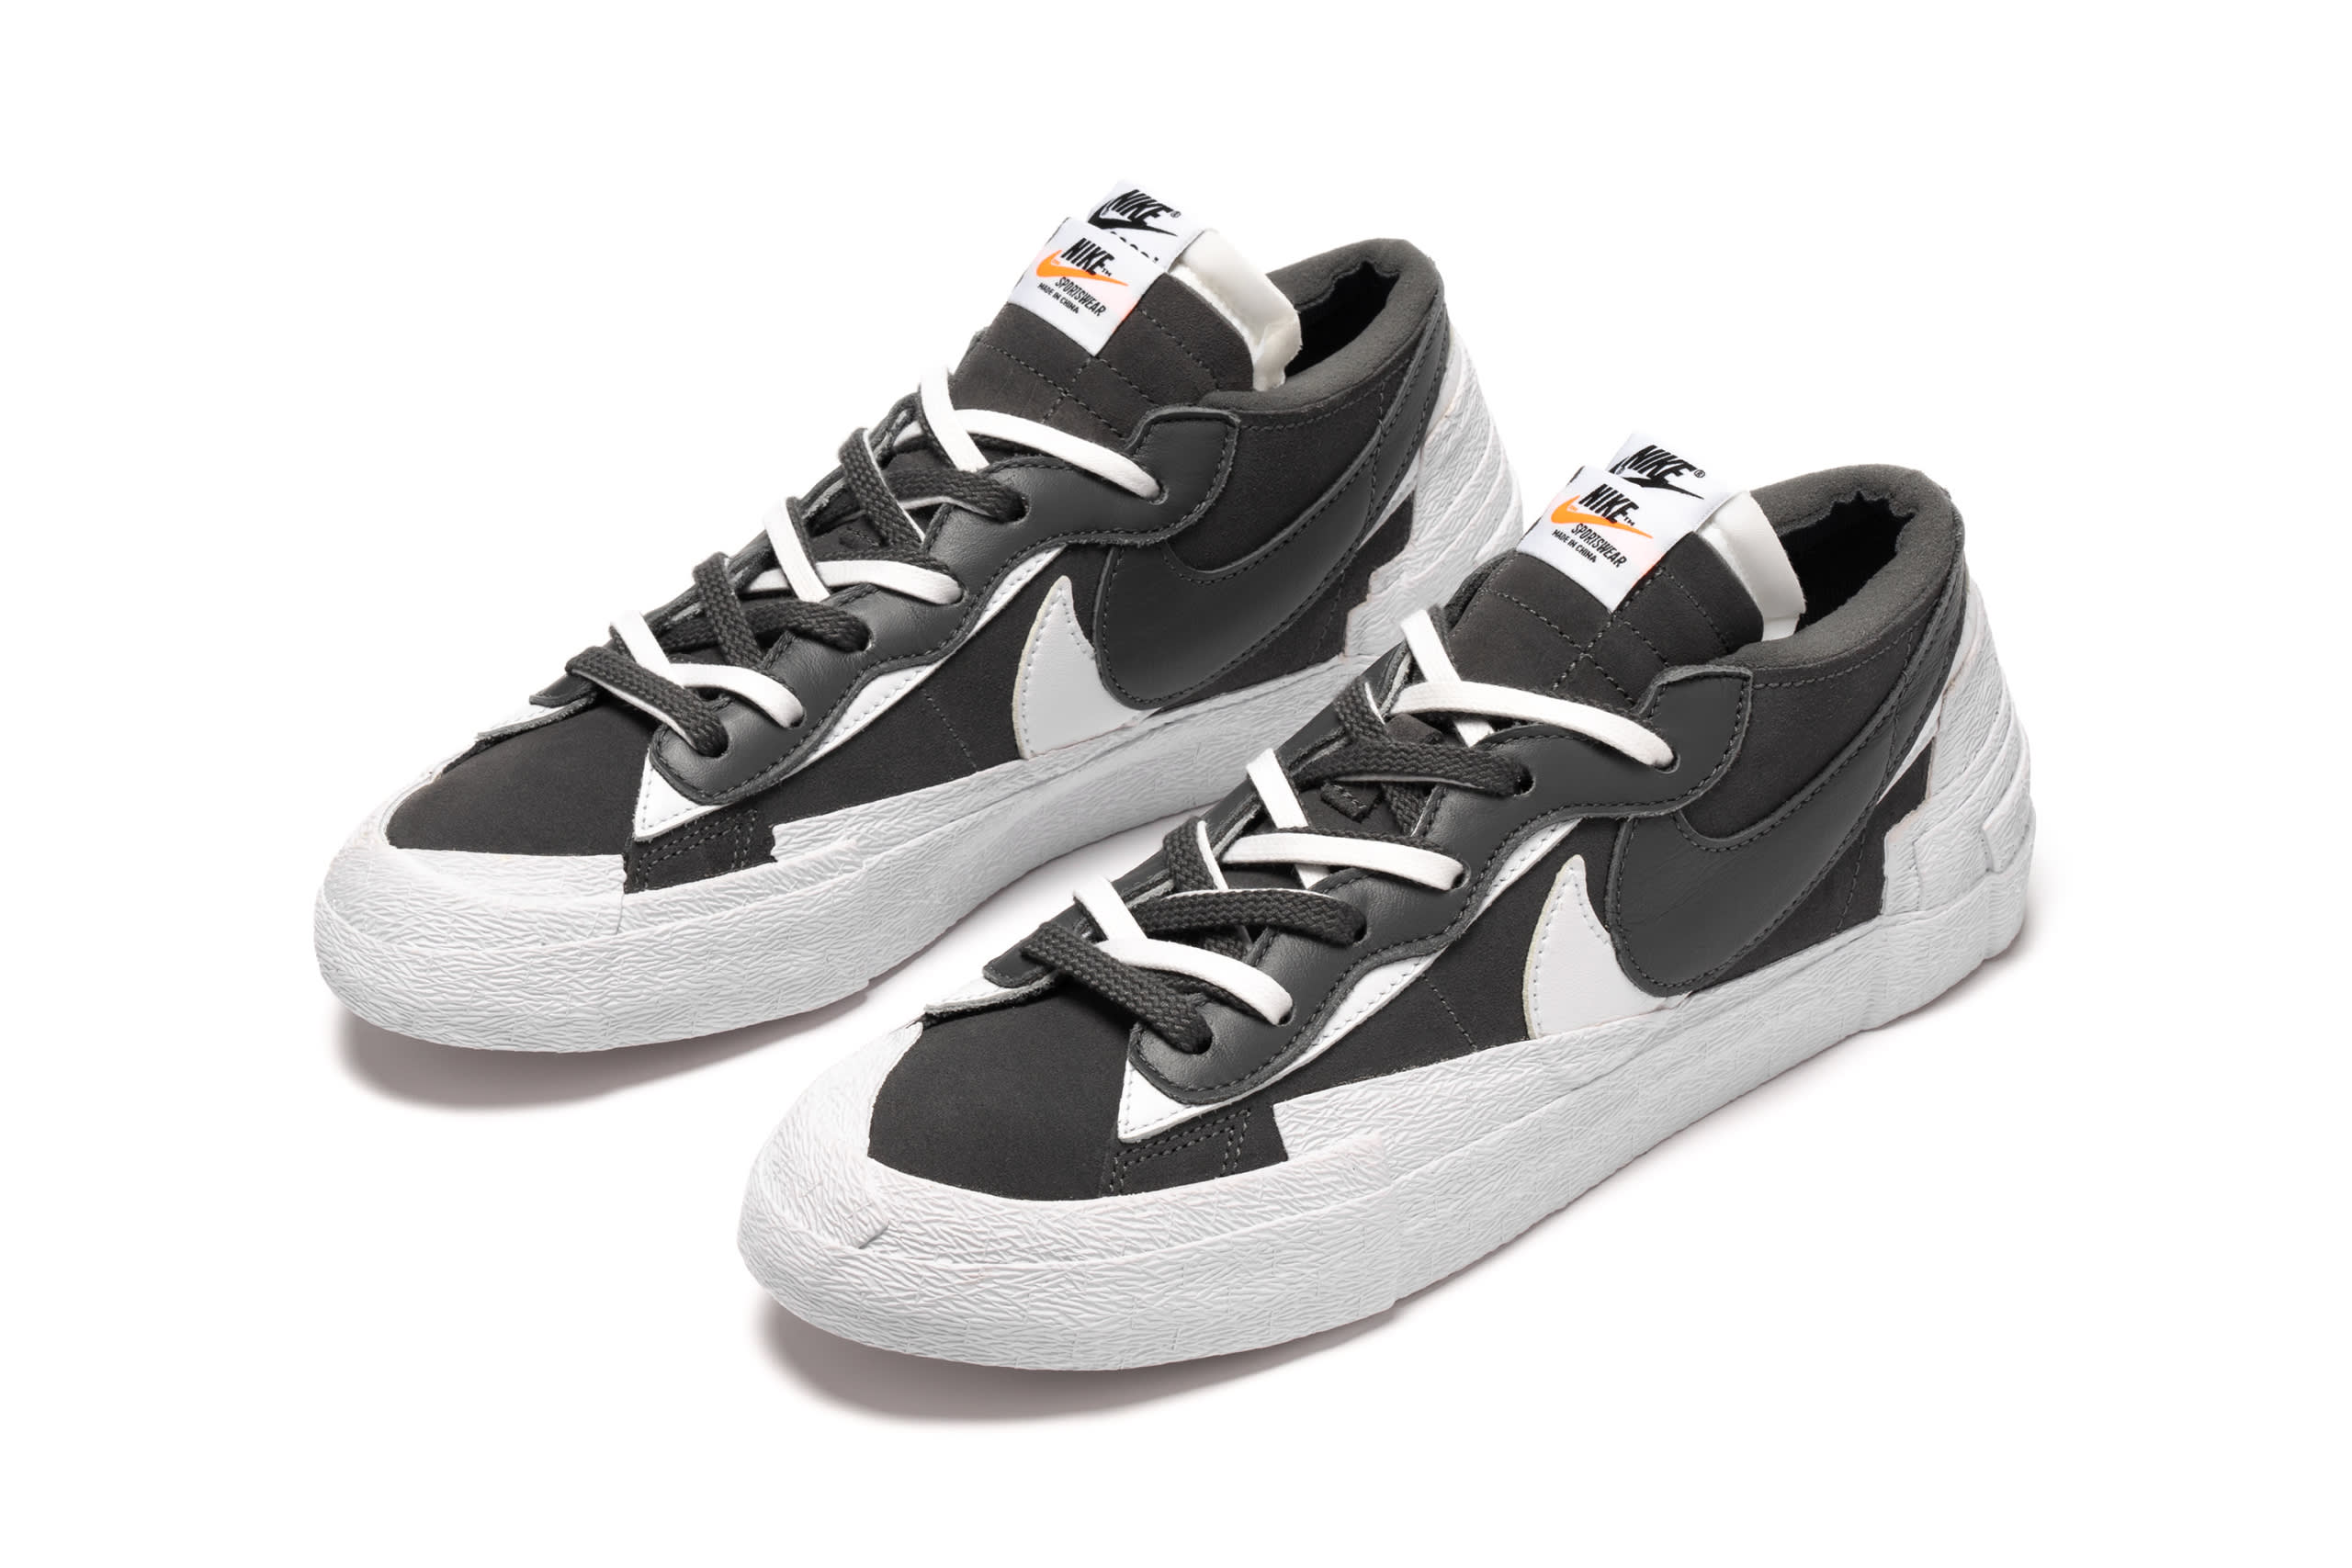 Nike x Sacai Blazer Low 'Iron Gray' | Release Date: 07.31.21 | HAVEN